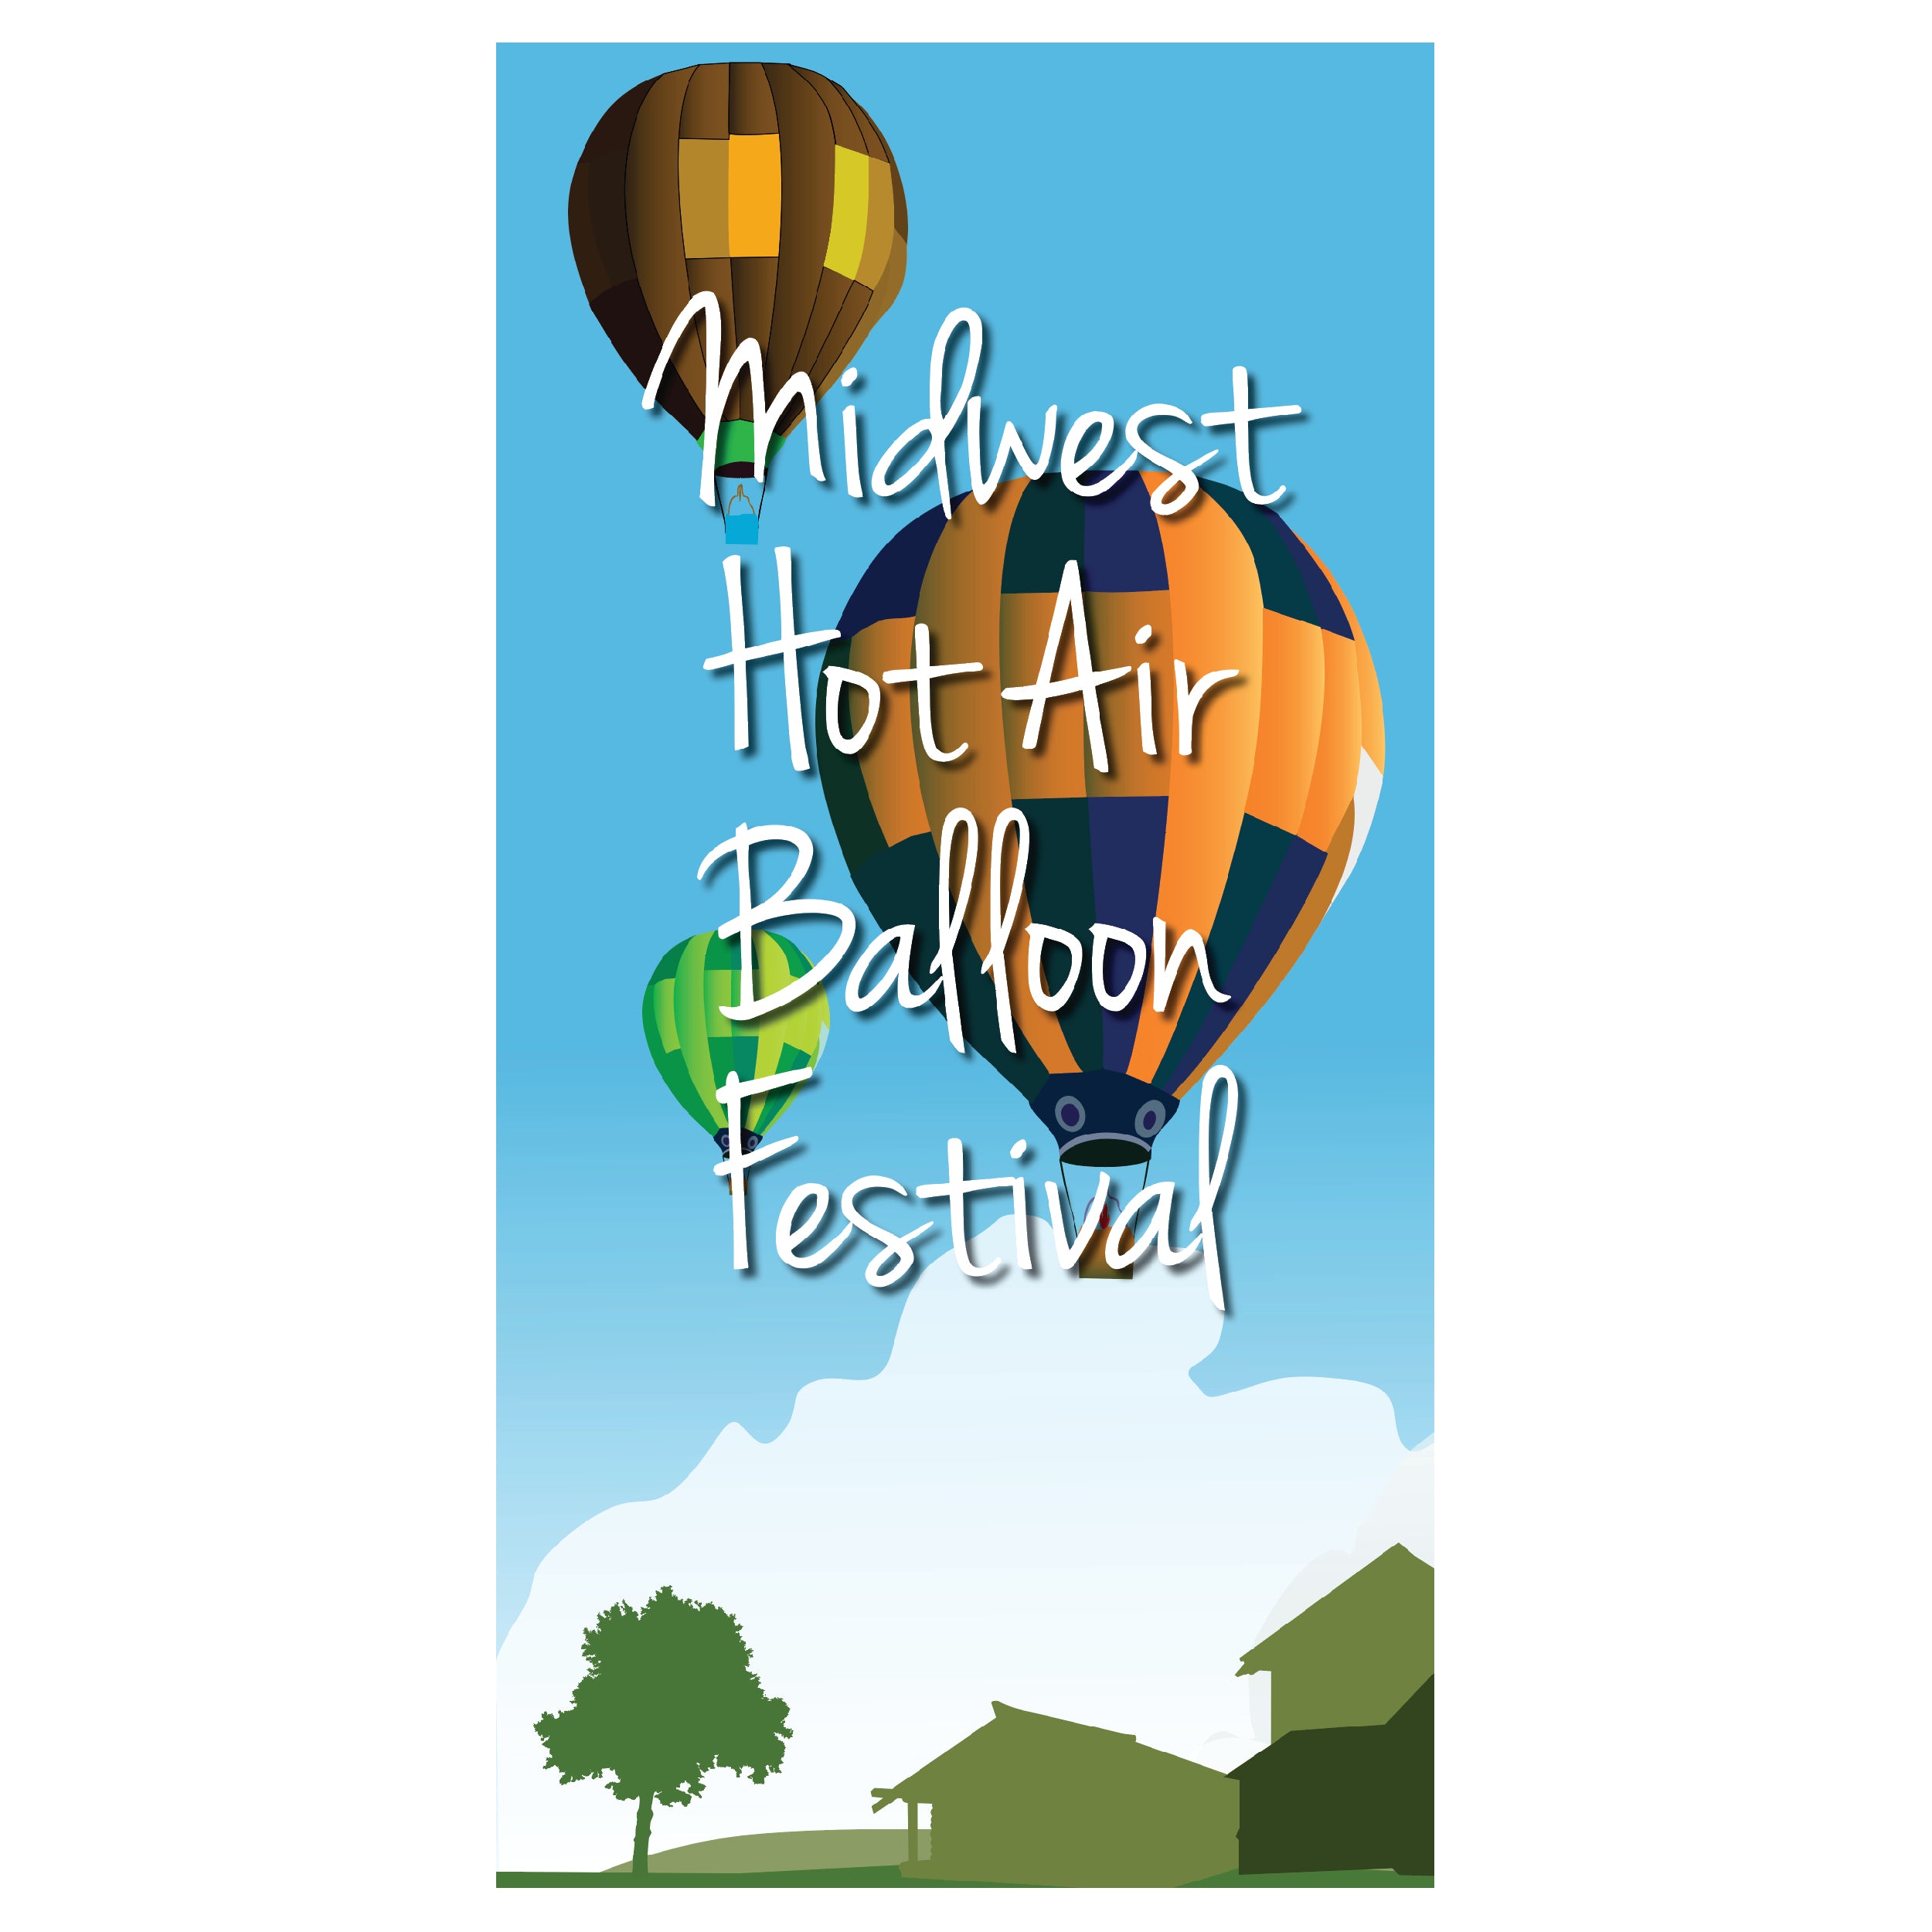 hot air balloon festival poster